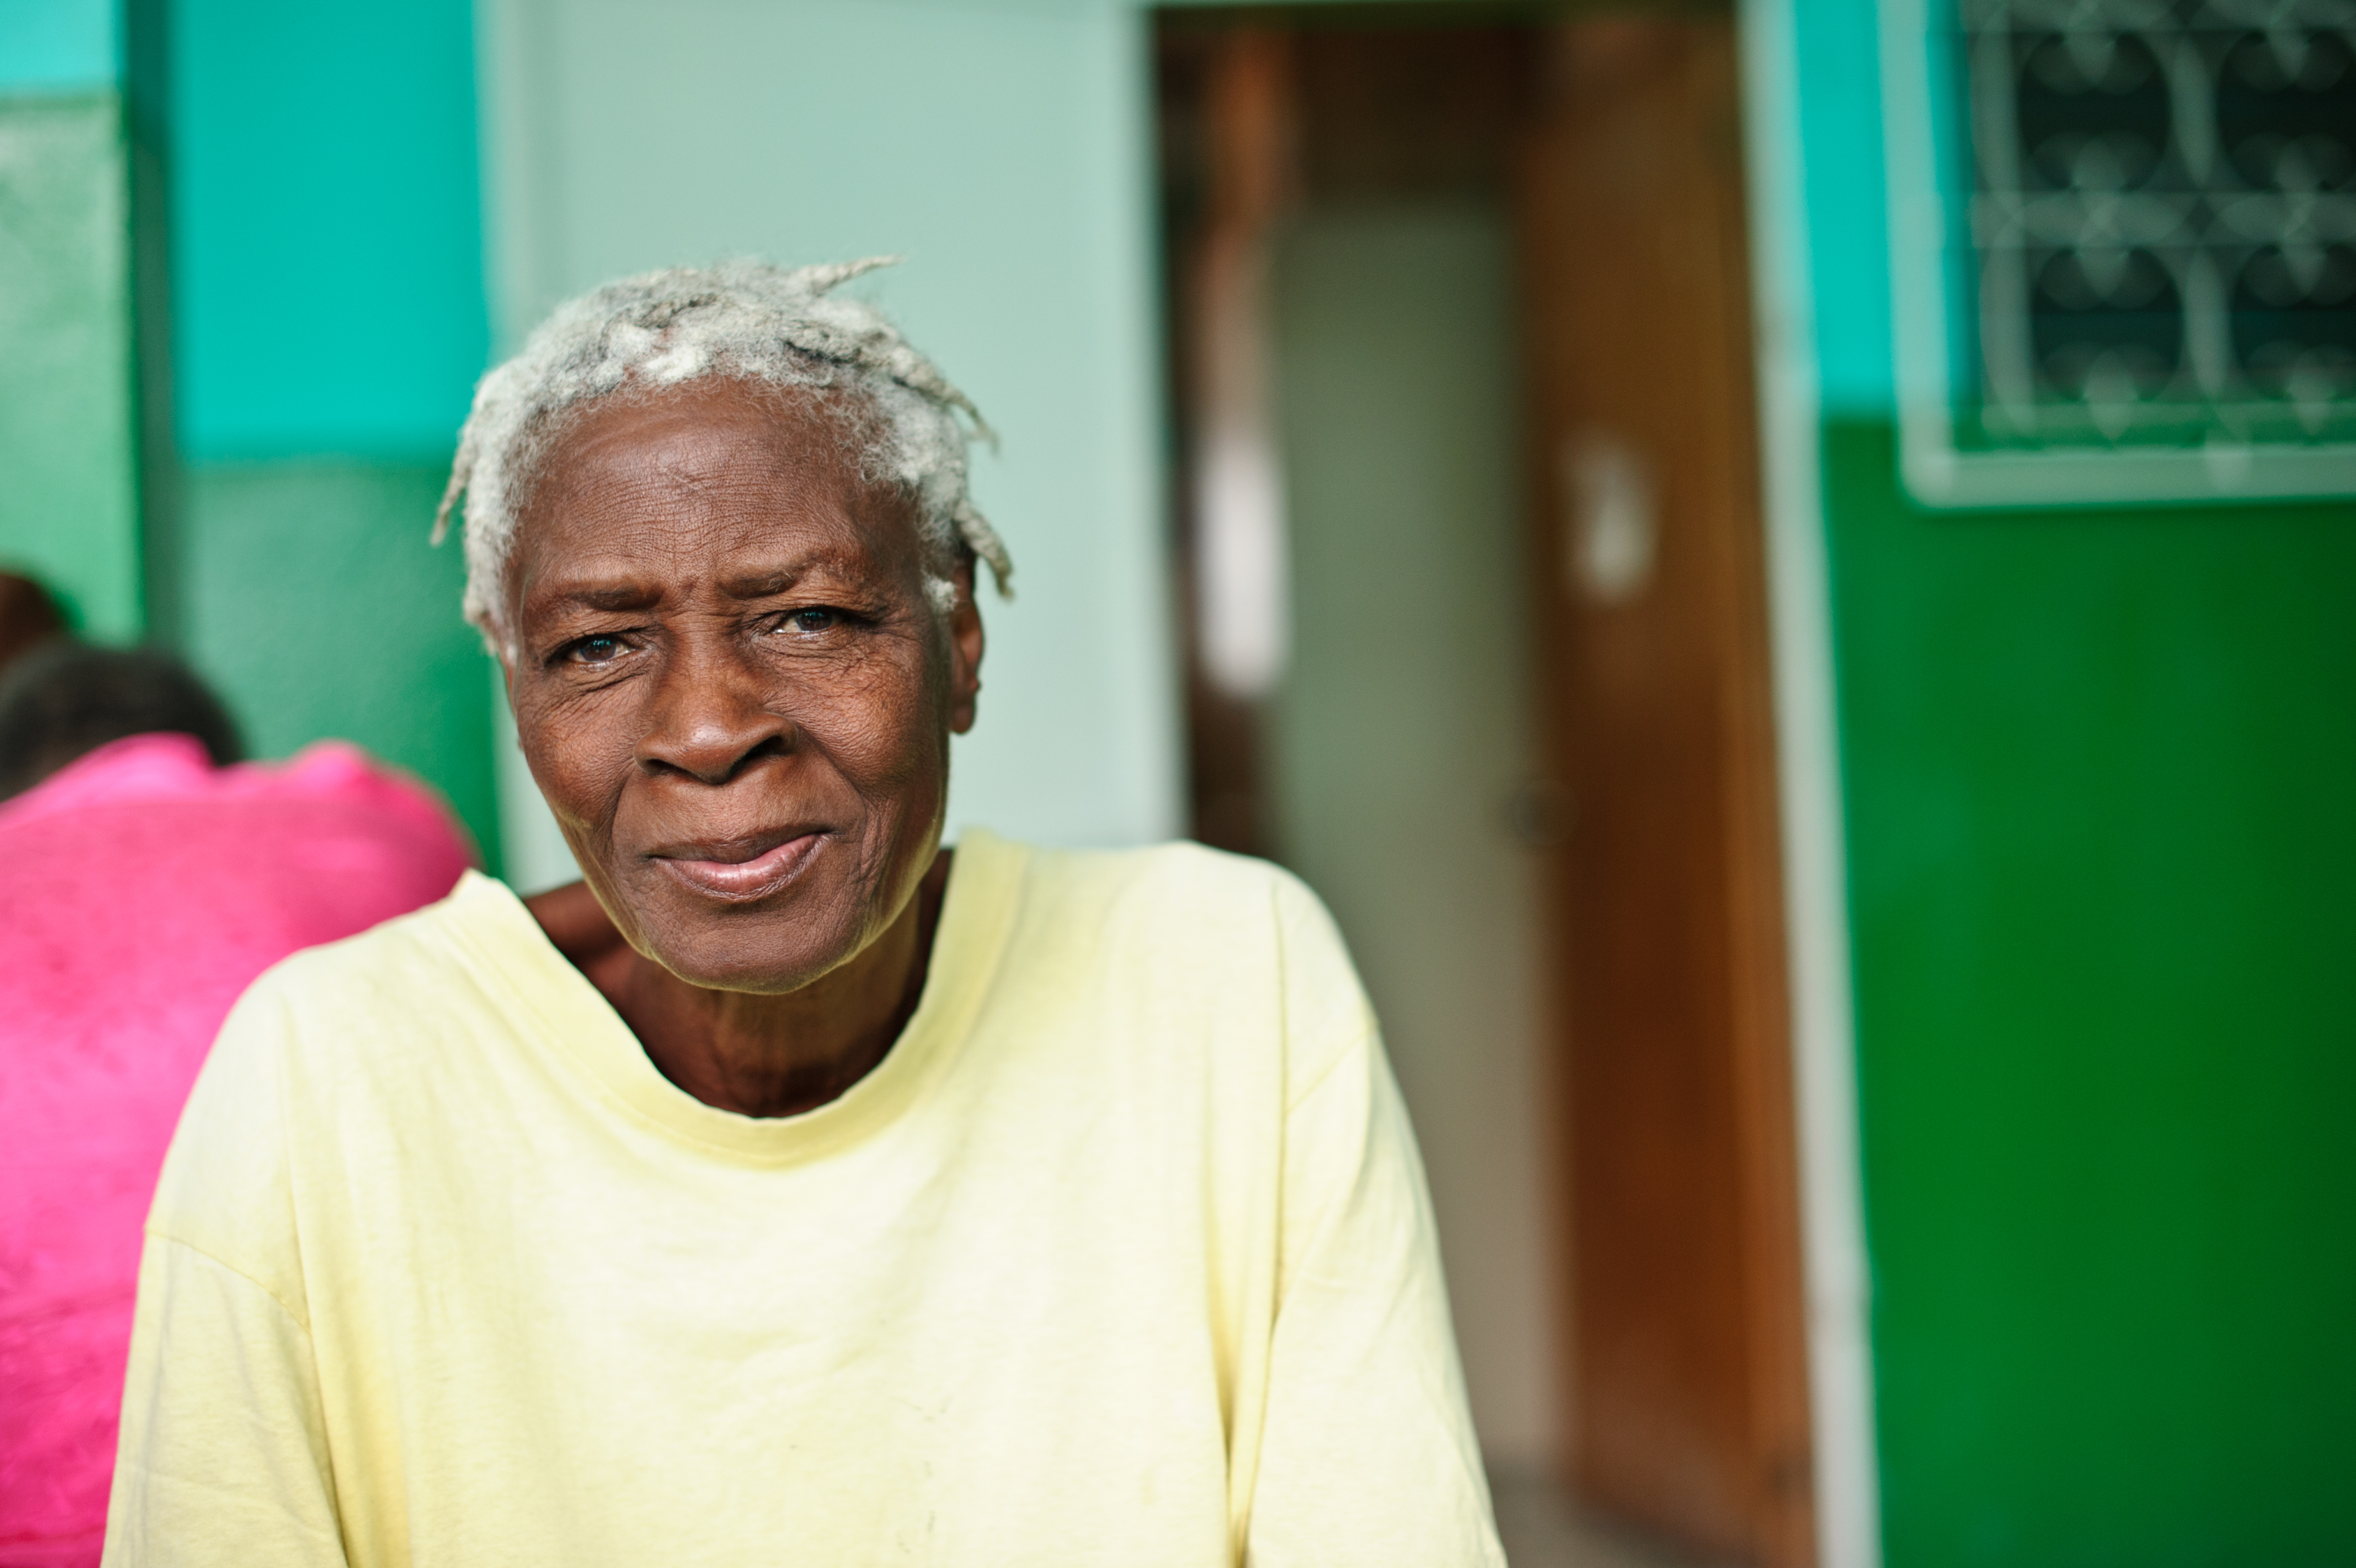 An older woman from Haiti calmly smiles.